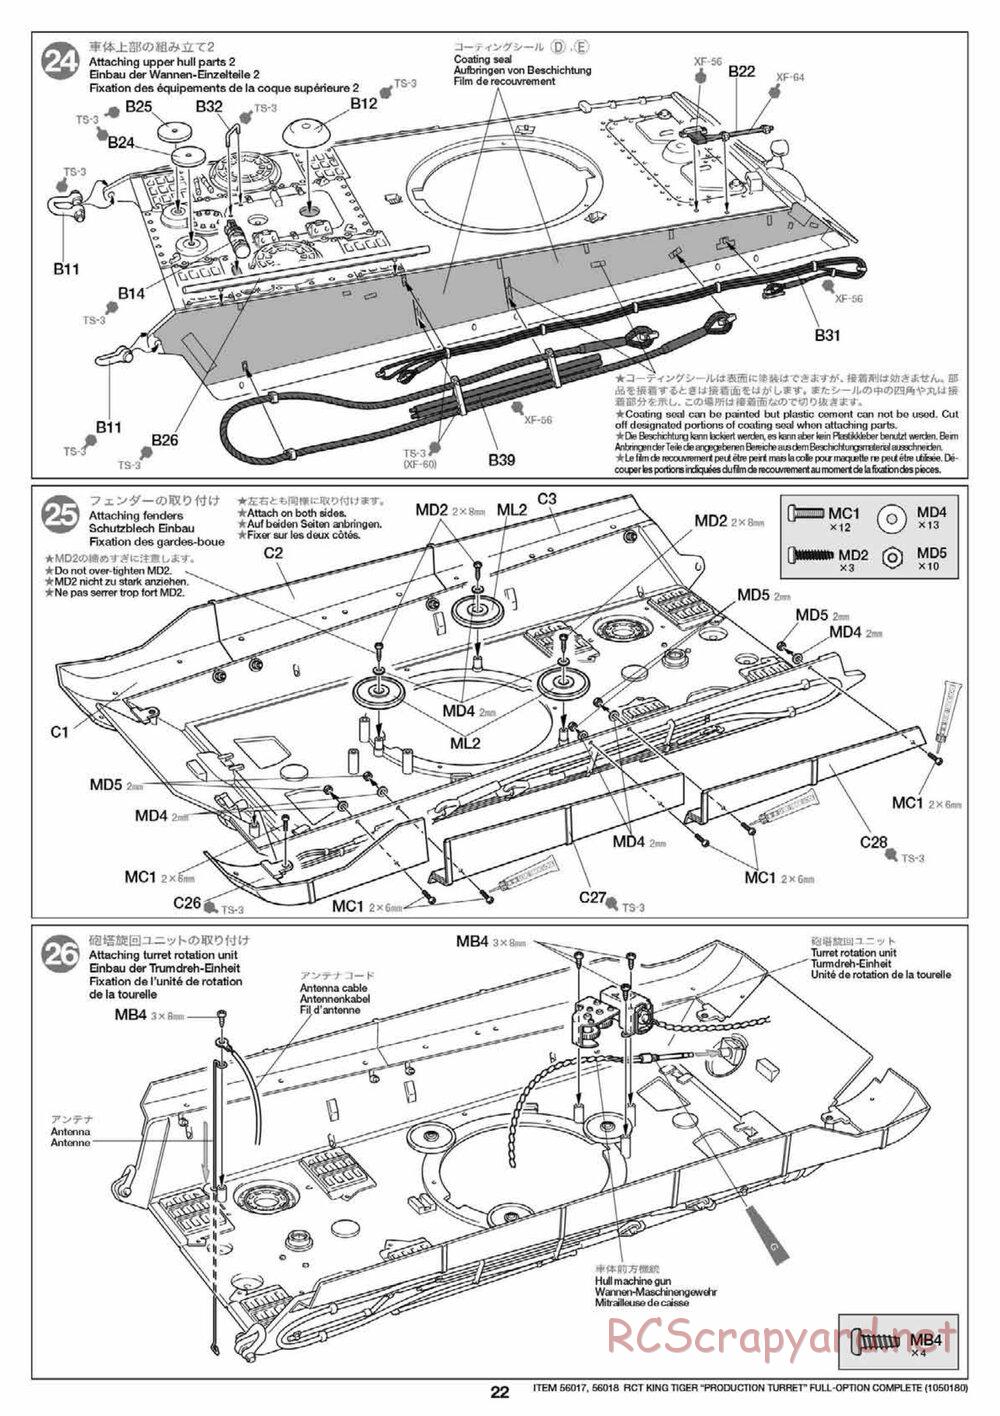 Tamiya - King Tiger - 1/16 Scale Chassis - Manual - Page 22